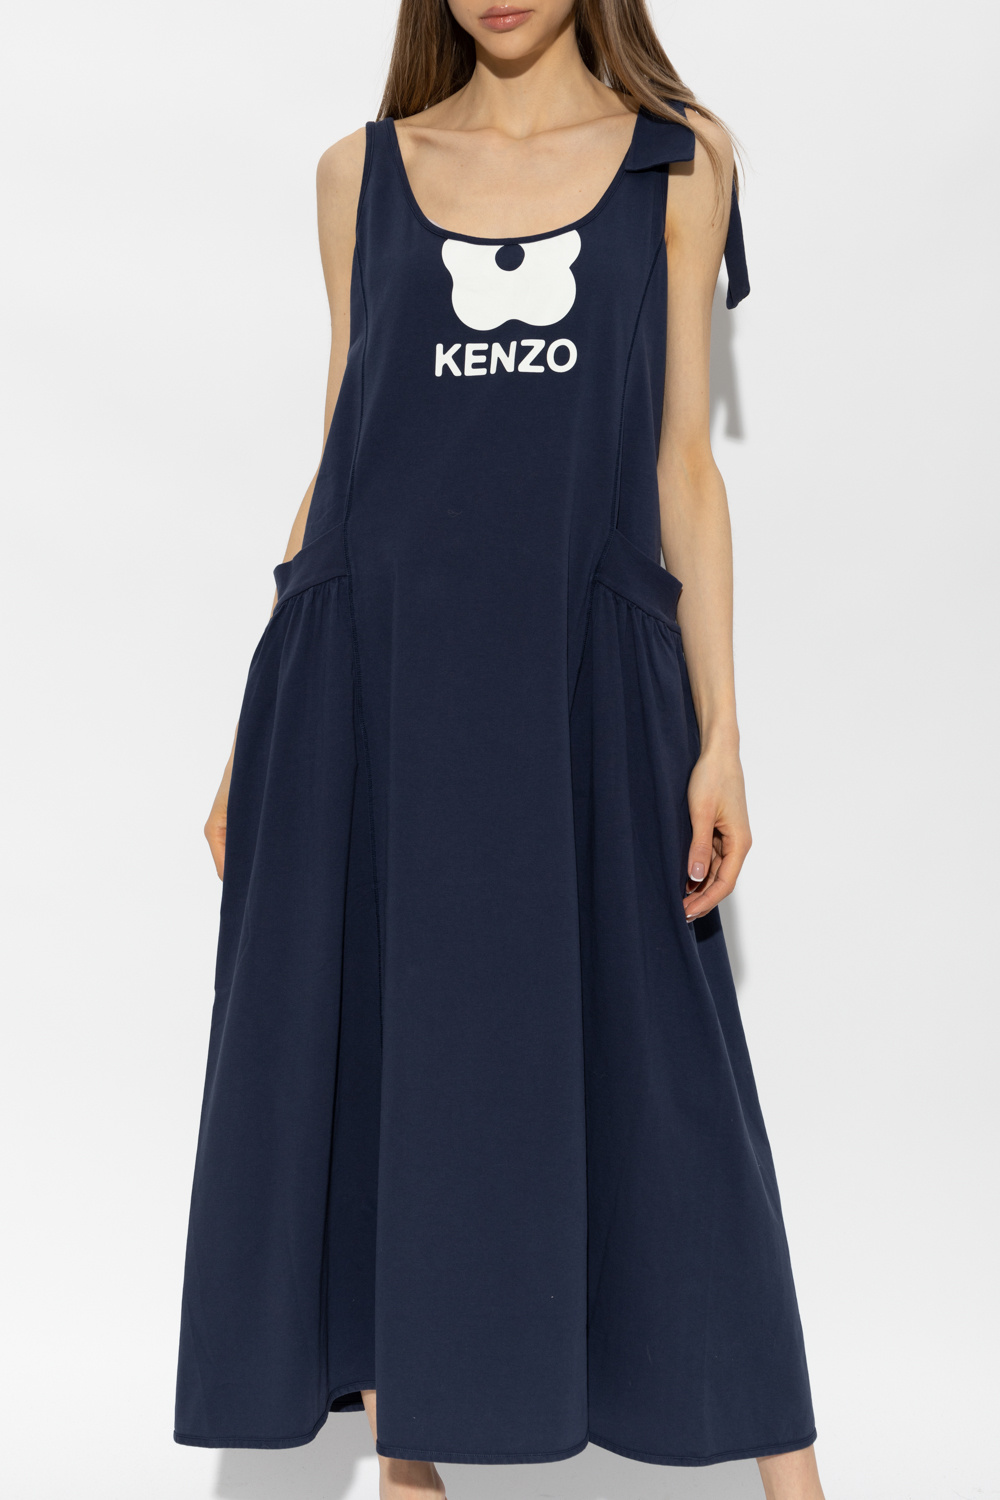 Kenzo Oversize dress